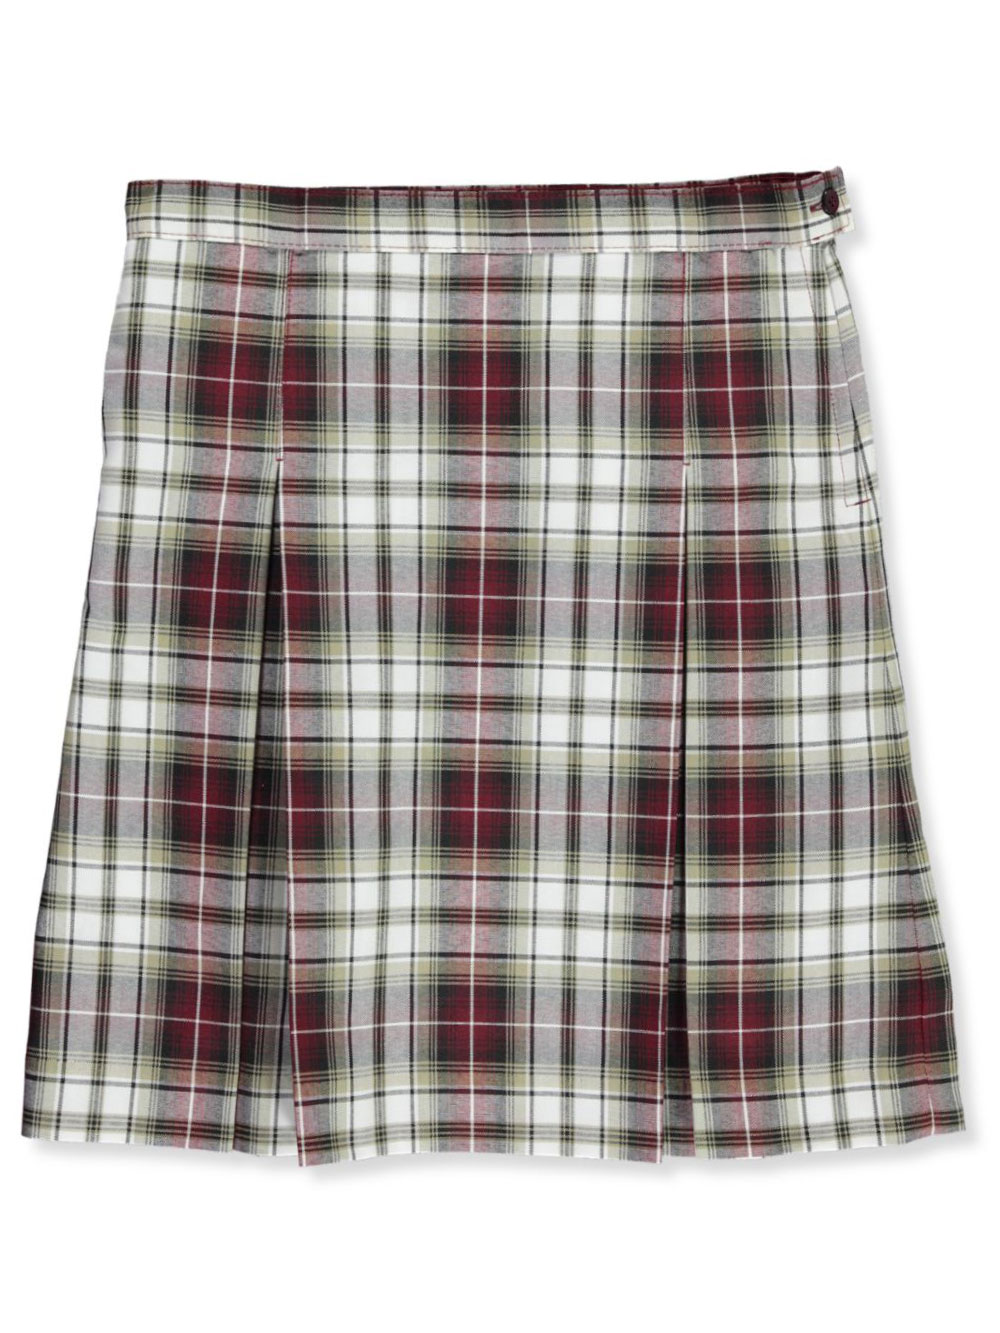 A+ Girls' Pleated School Uninform Skirt